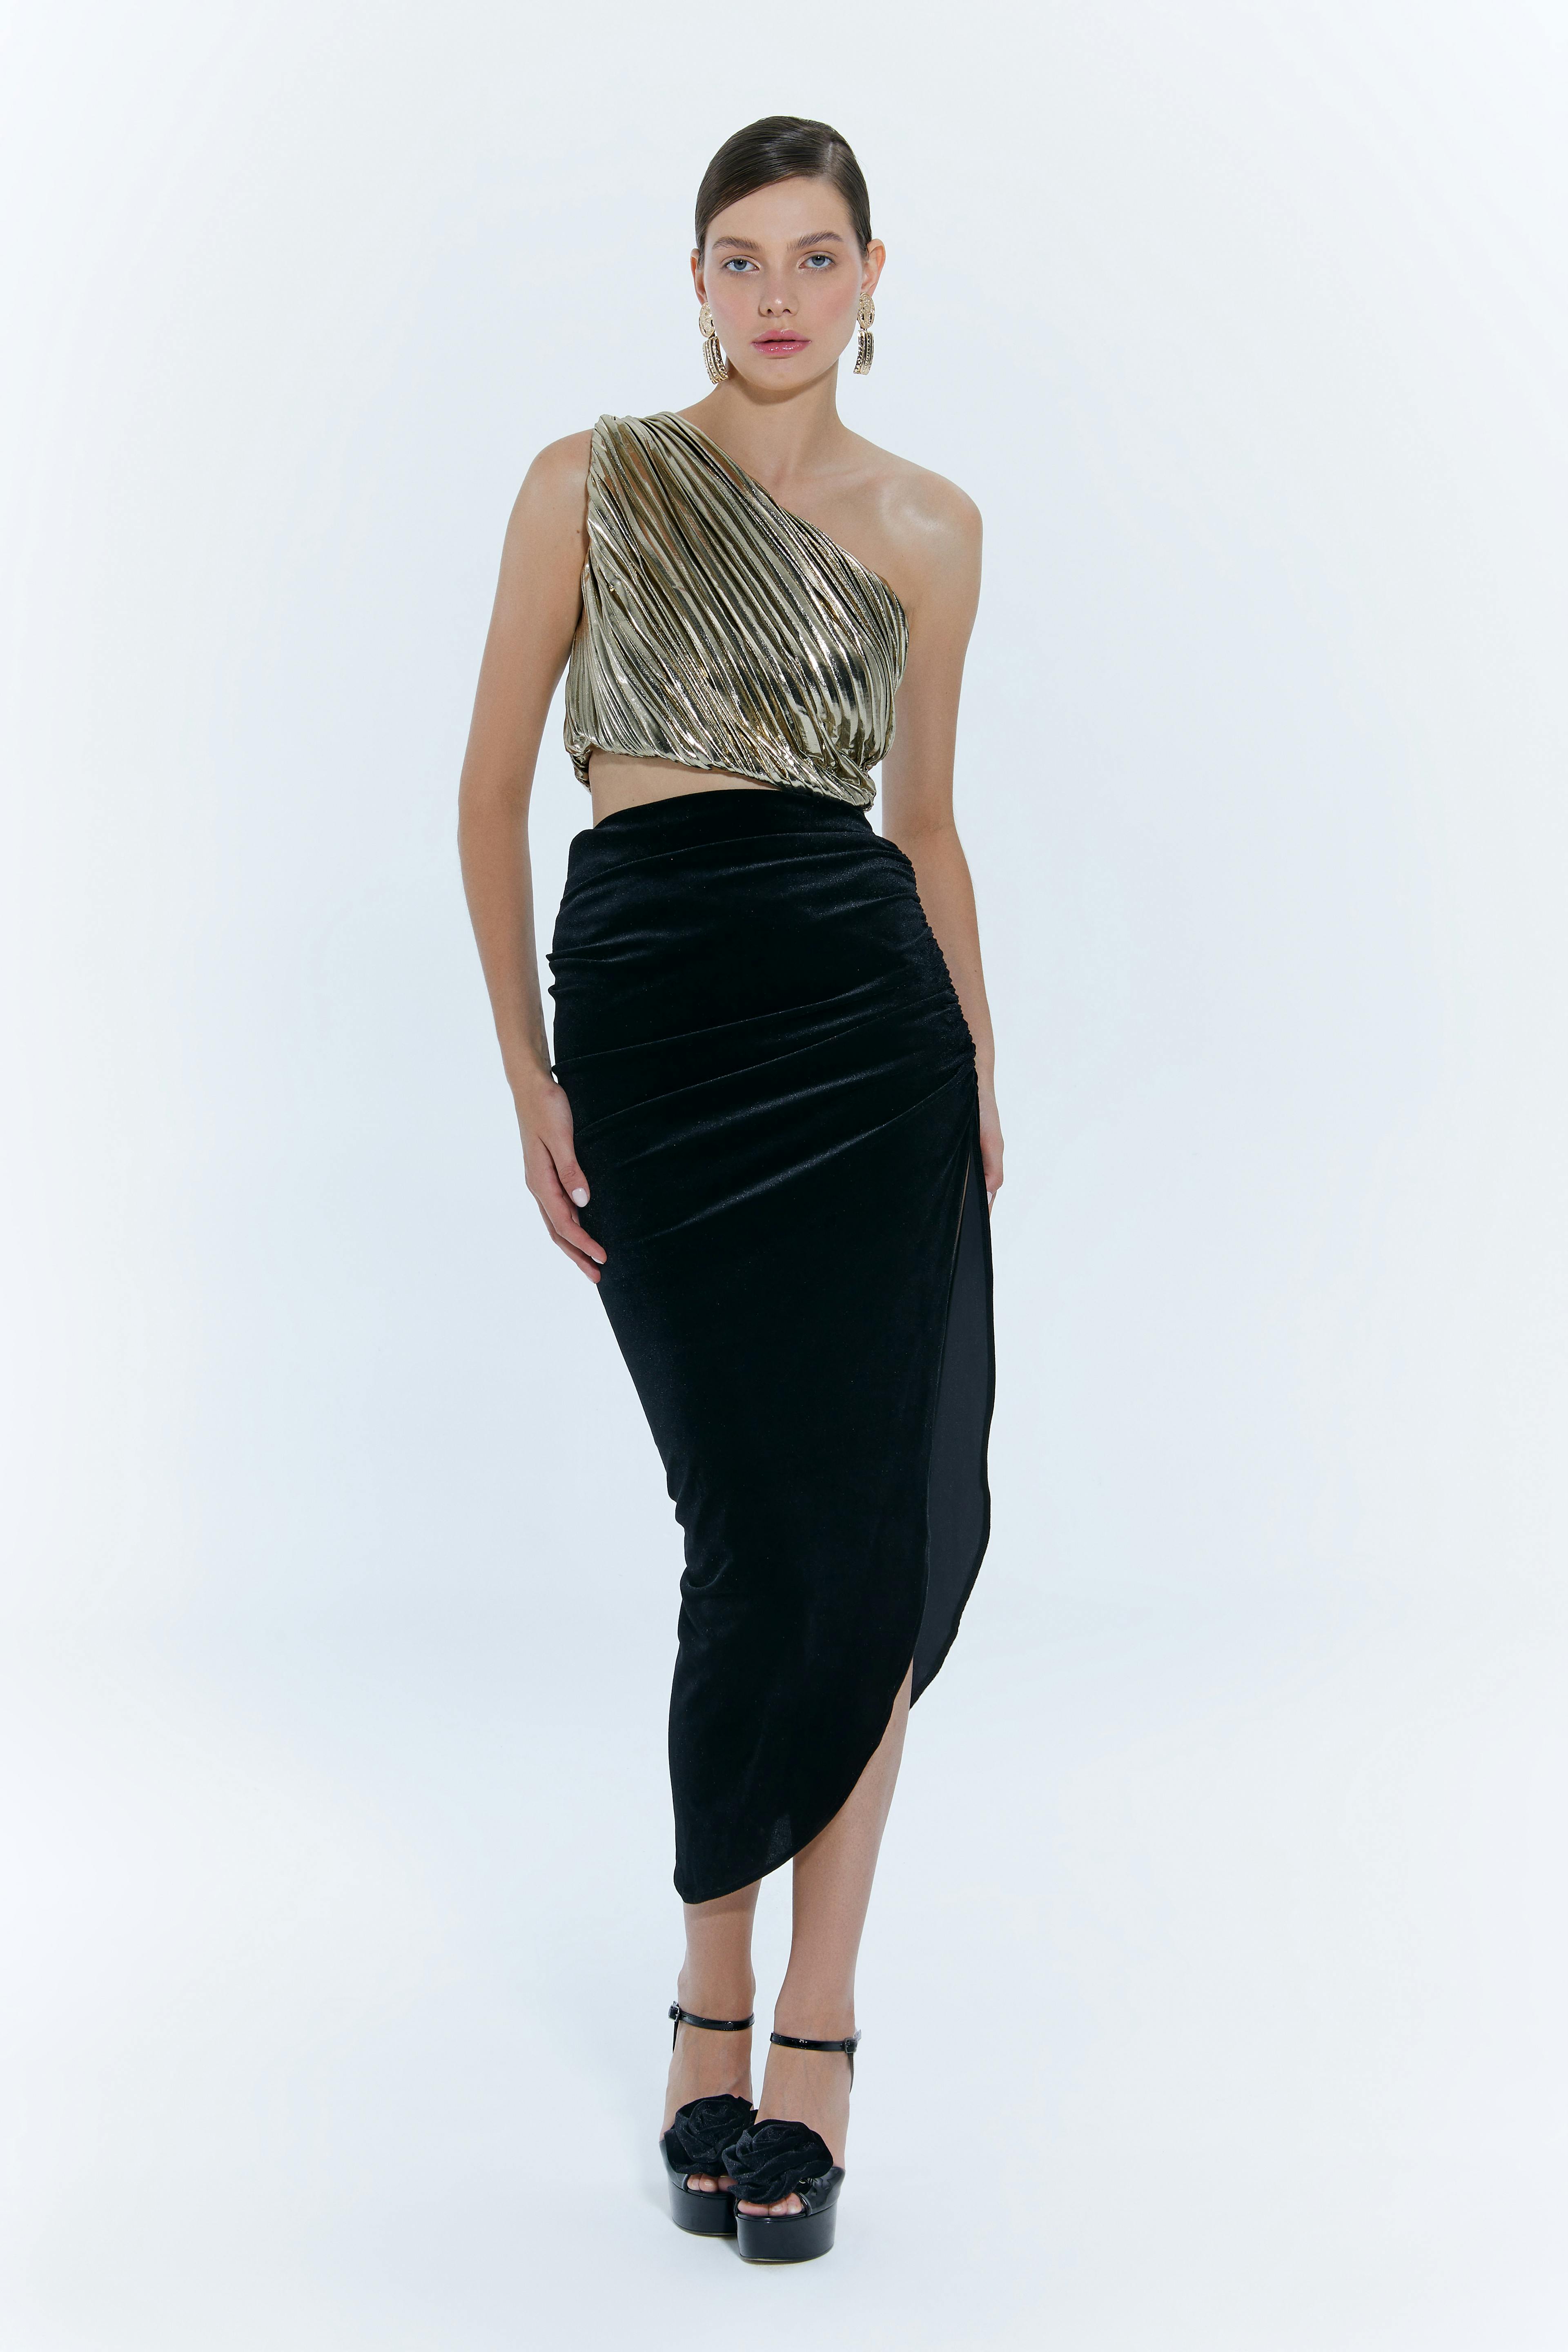 Beau-Rivage Dress, a product by Nur Karaata